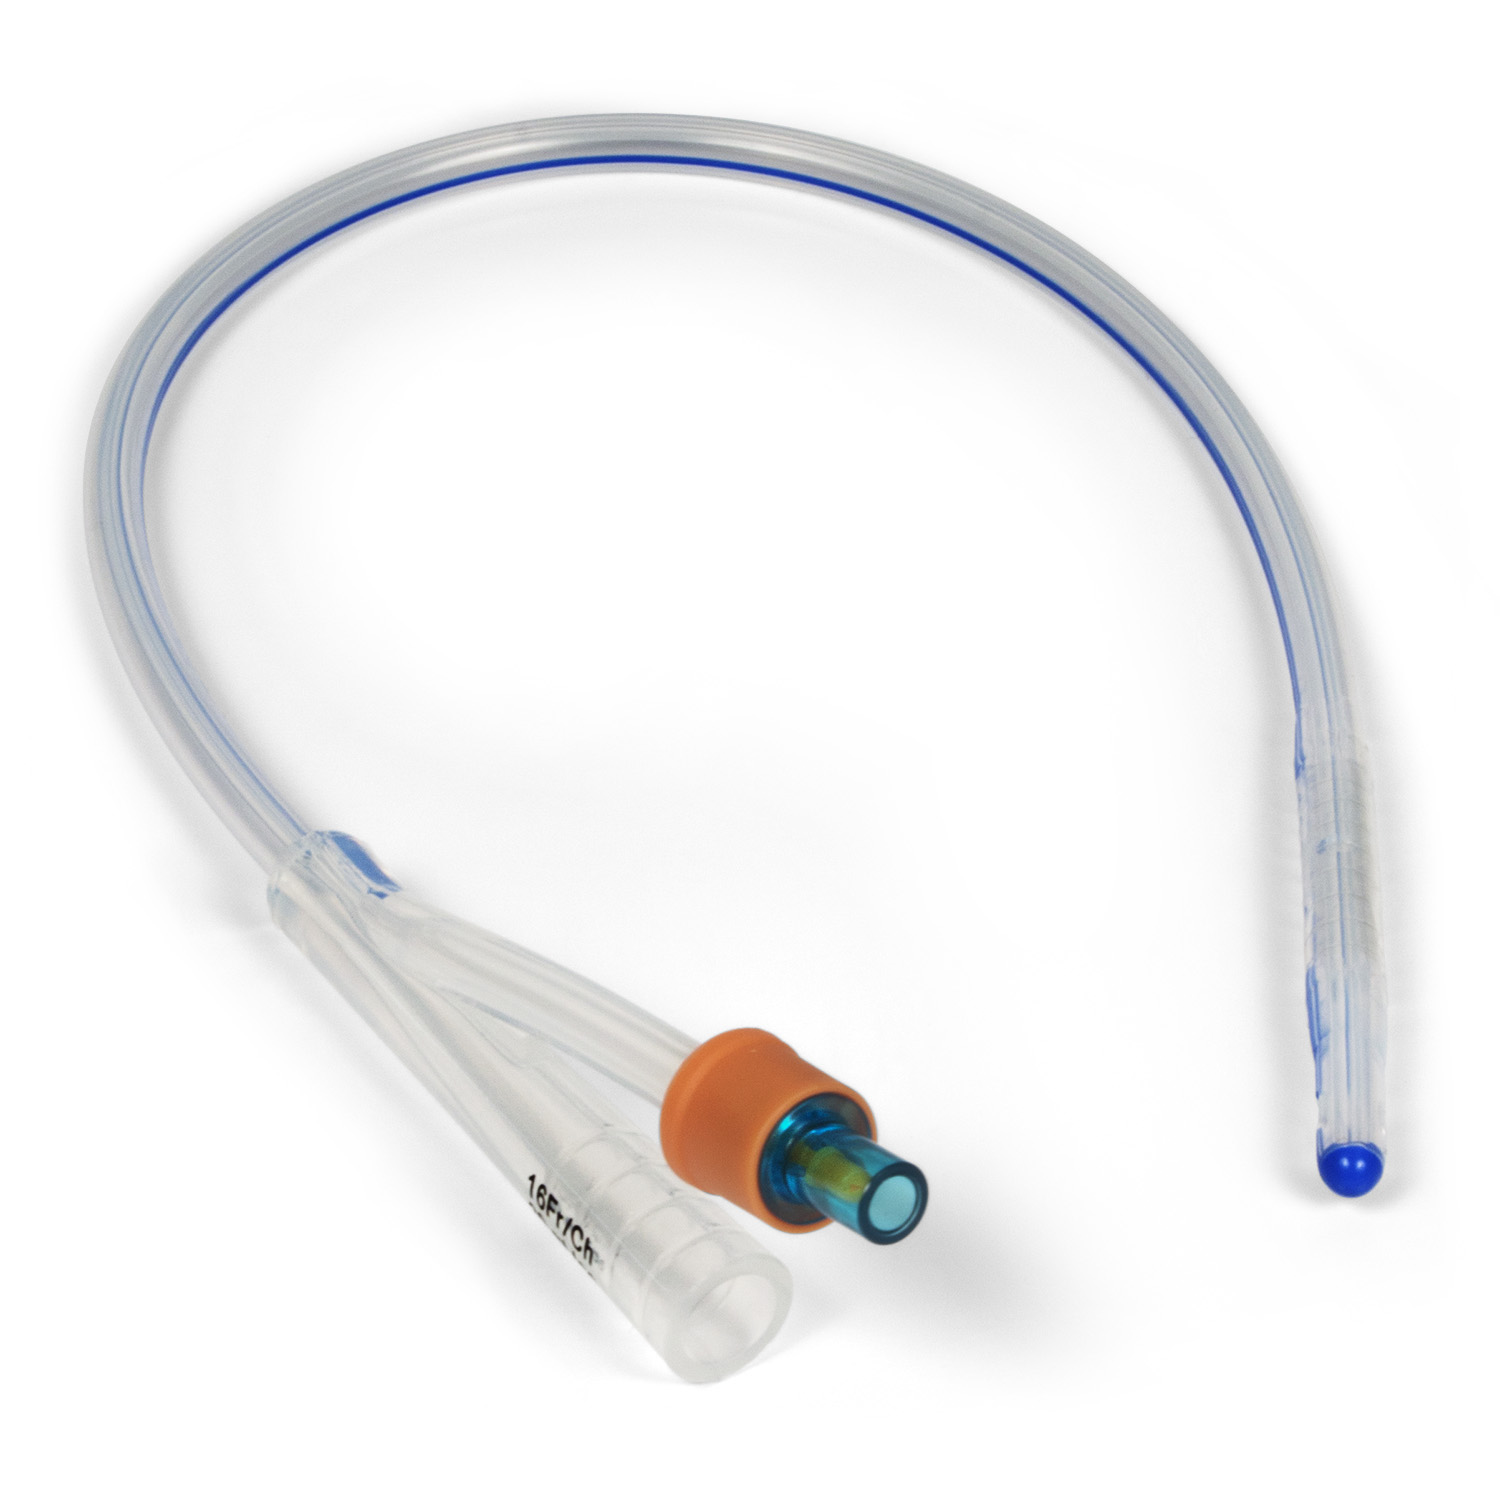 Silicone Foley Catheters 2-way Standard - 24FR / 5-10cc